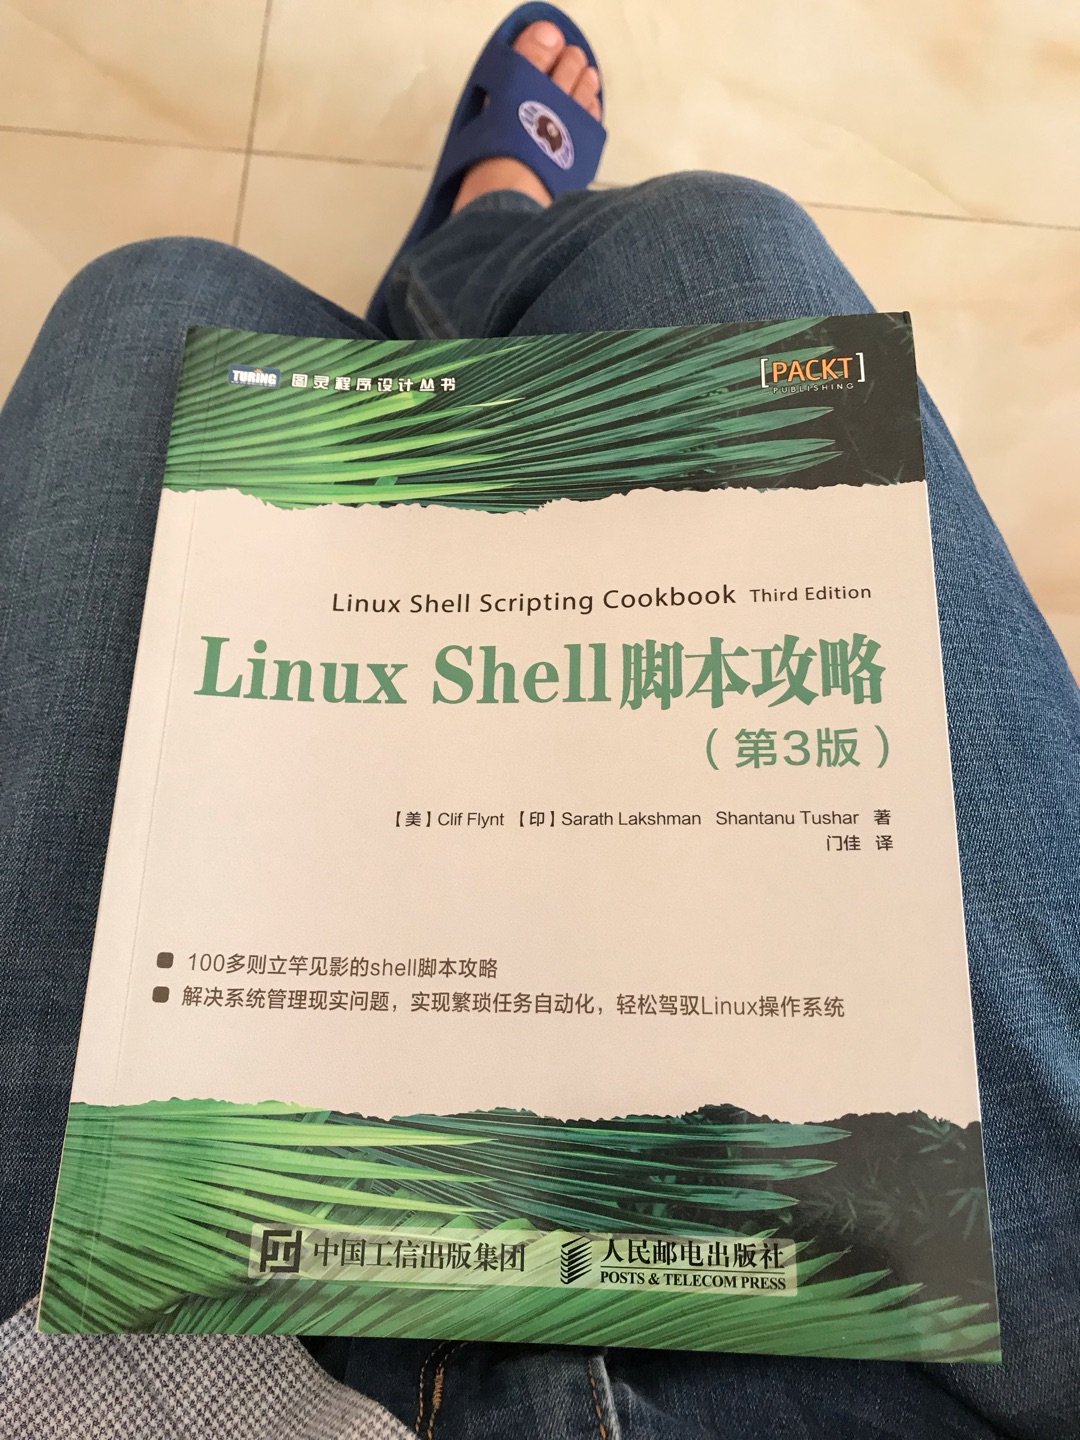 Linux shell是系统管理人员必学的技能，这个书籍很适合入门学习！